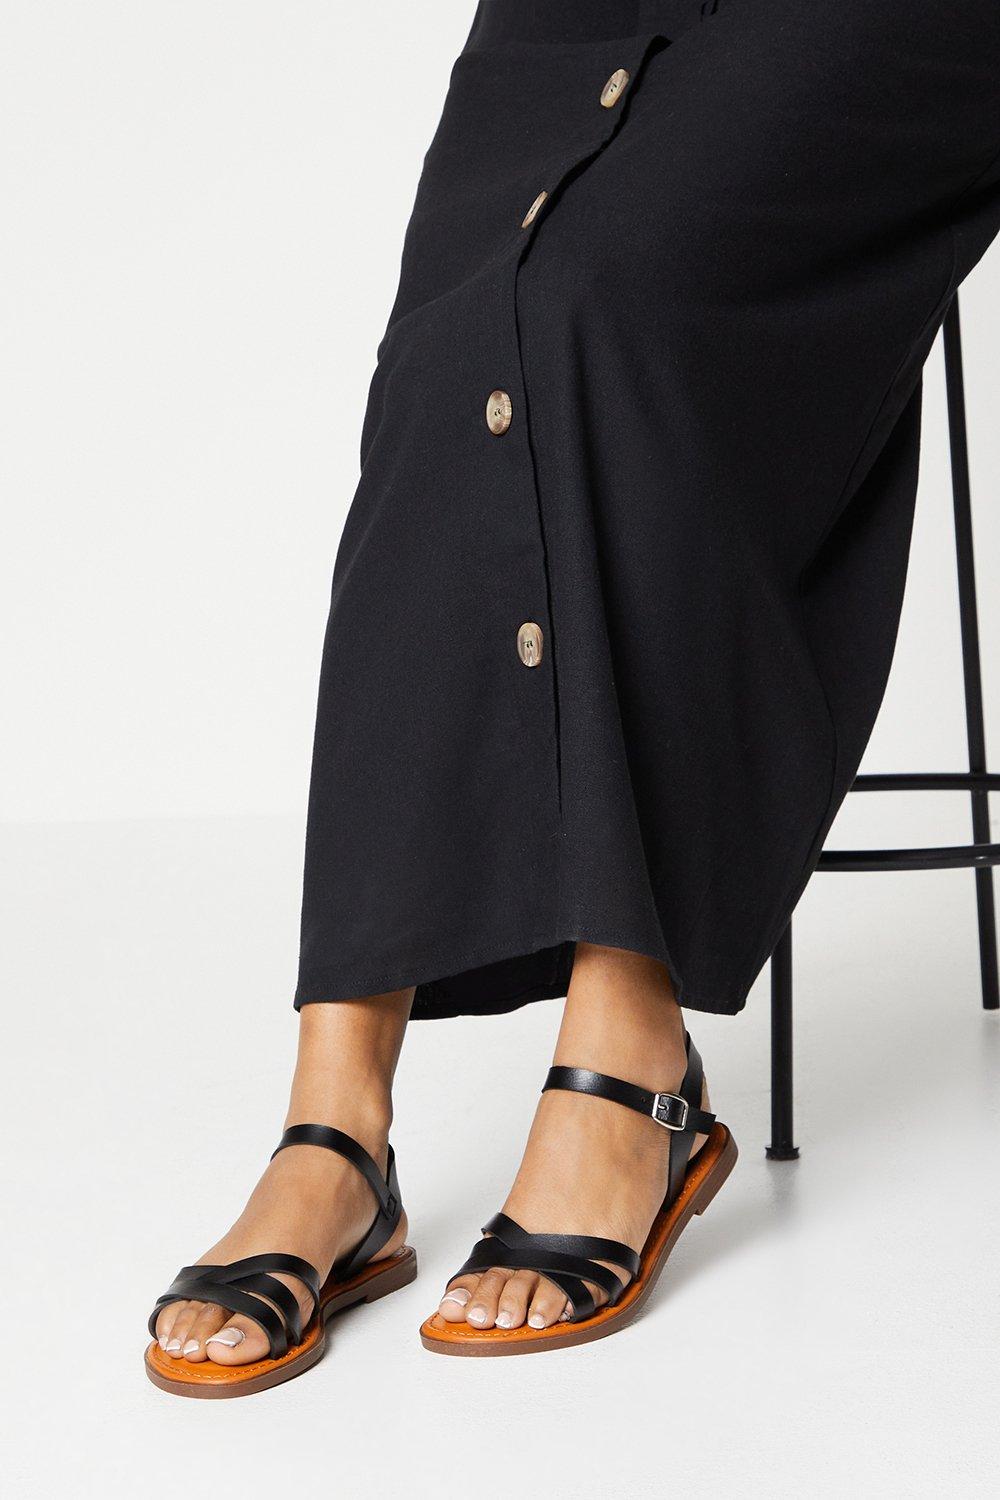 Women’s Good For The Sole: Melanie Comfort Cross Strap Flat Sandals - black - 7